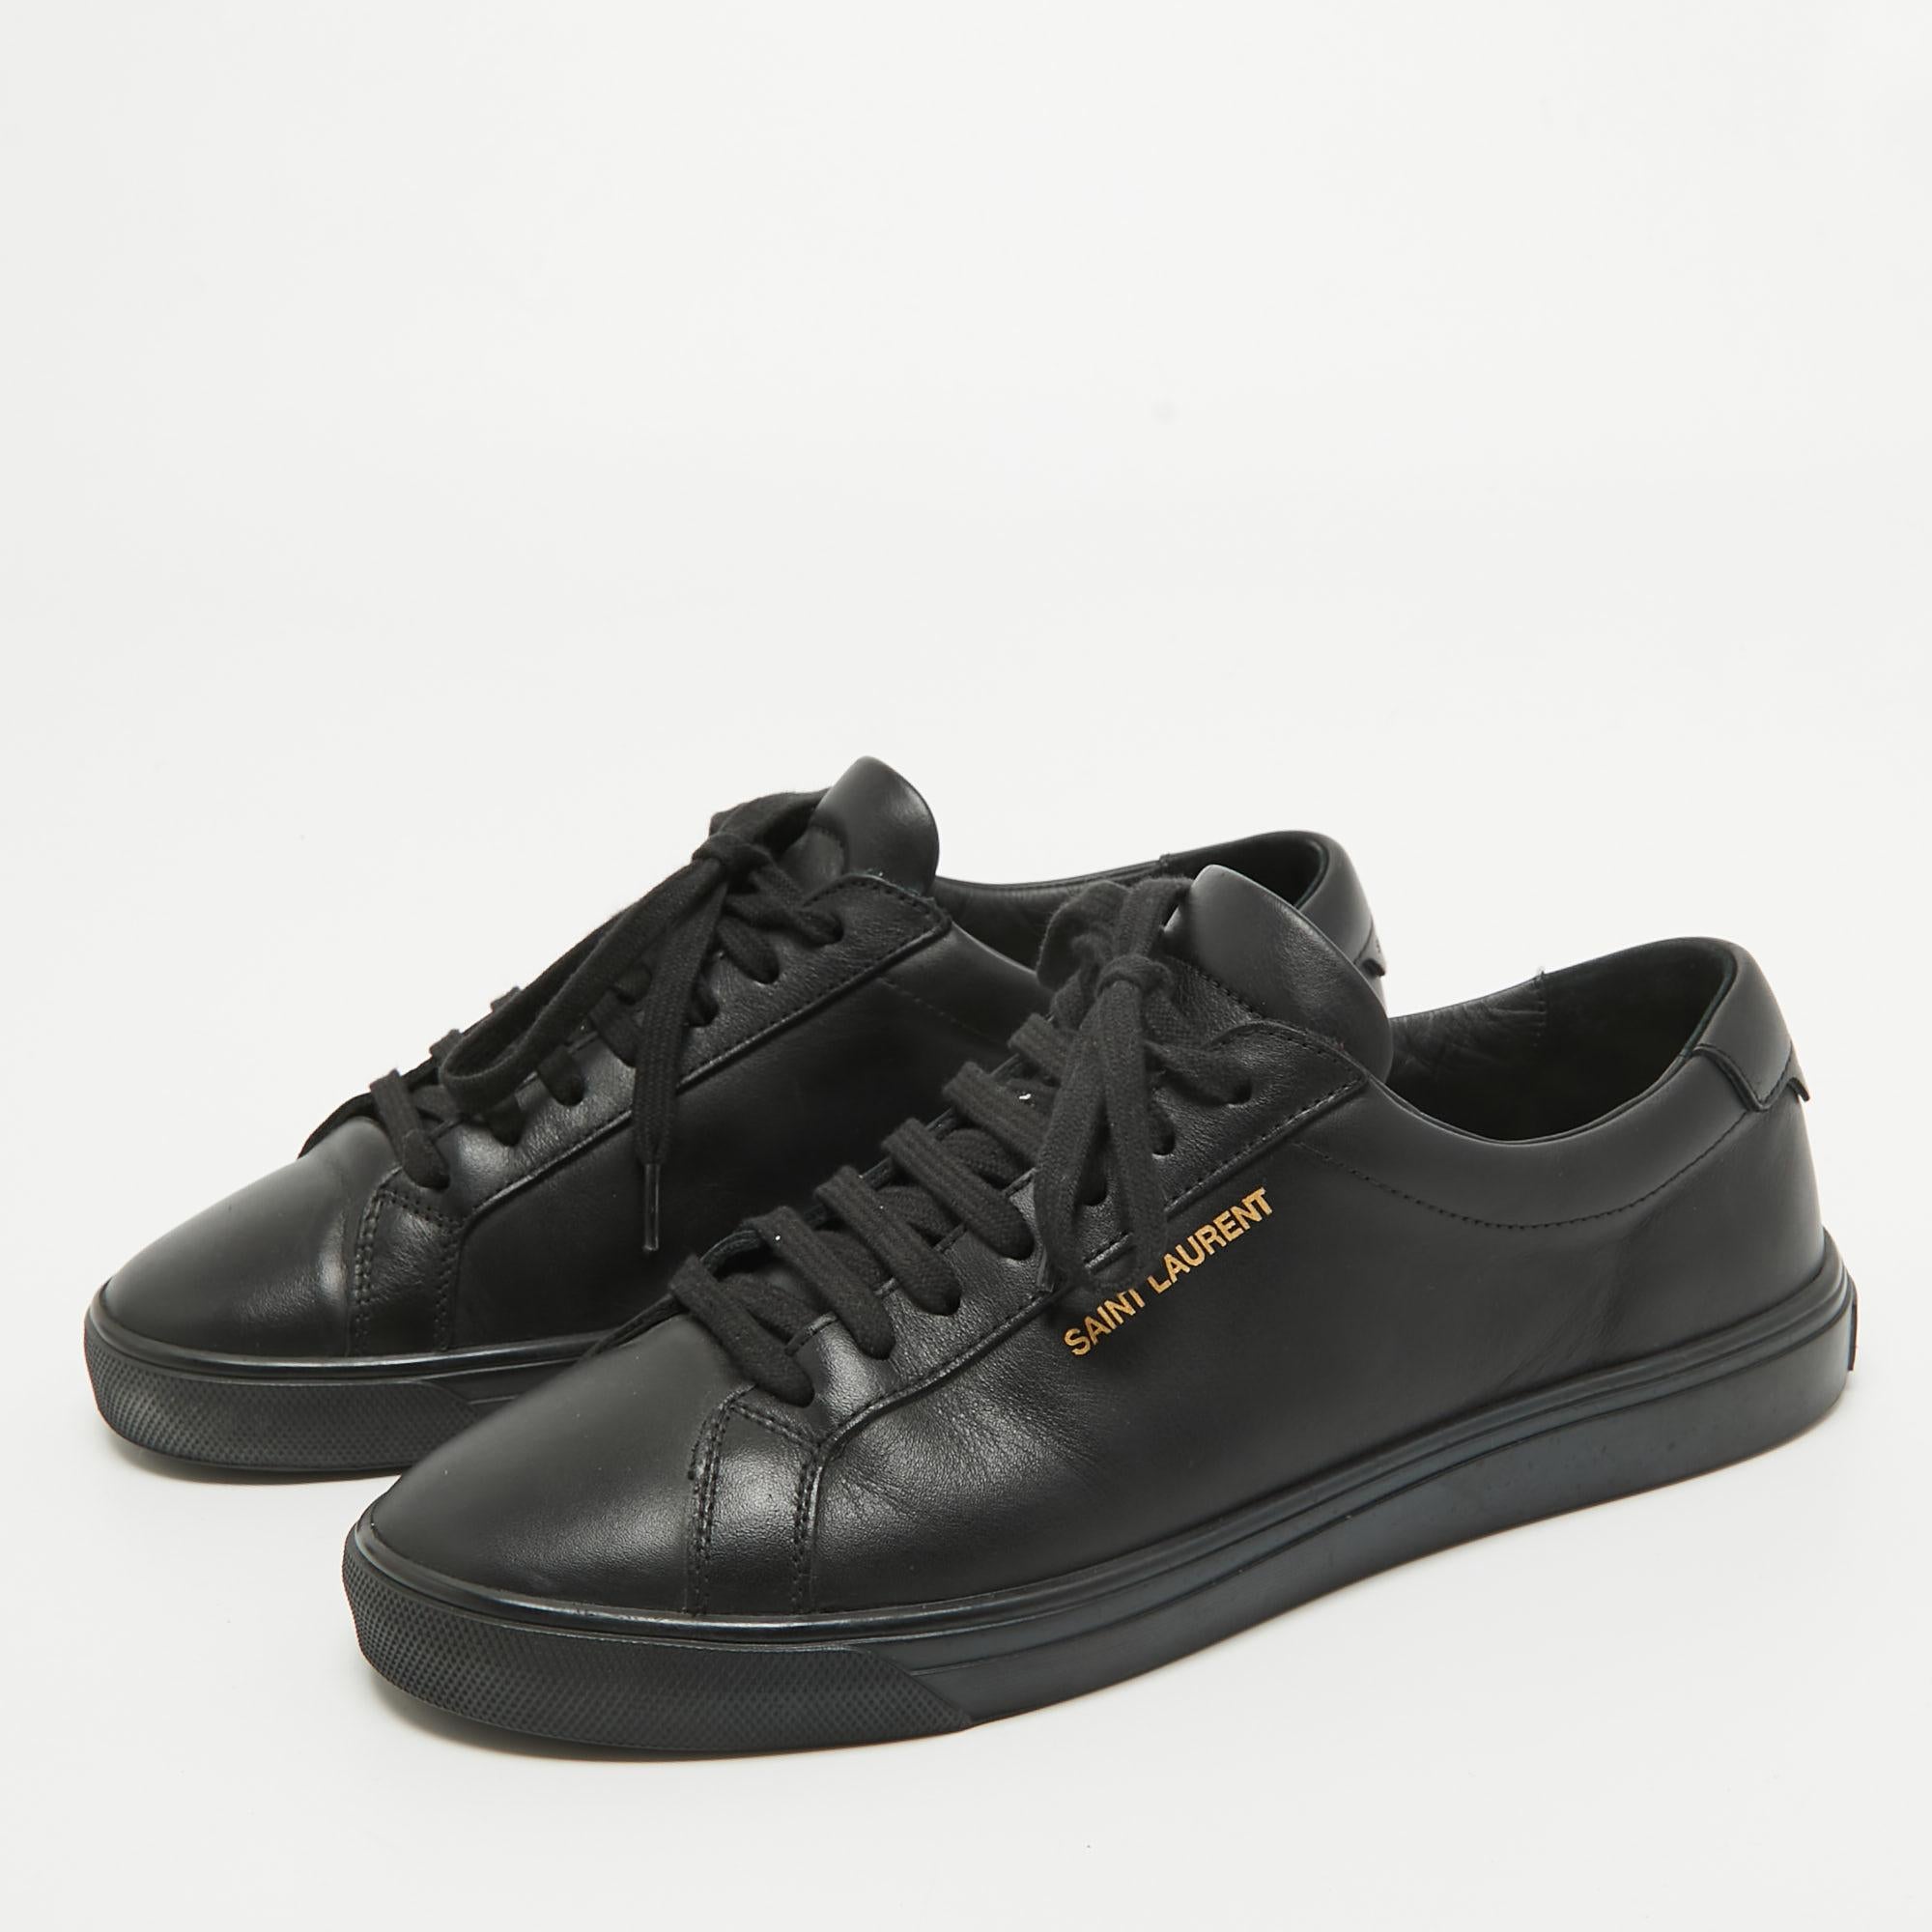 Saint Laurent Paris Black Leather Andy Low Top Sneakers Size 37 For Sale 3